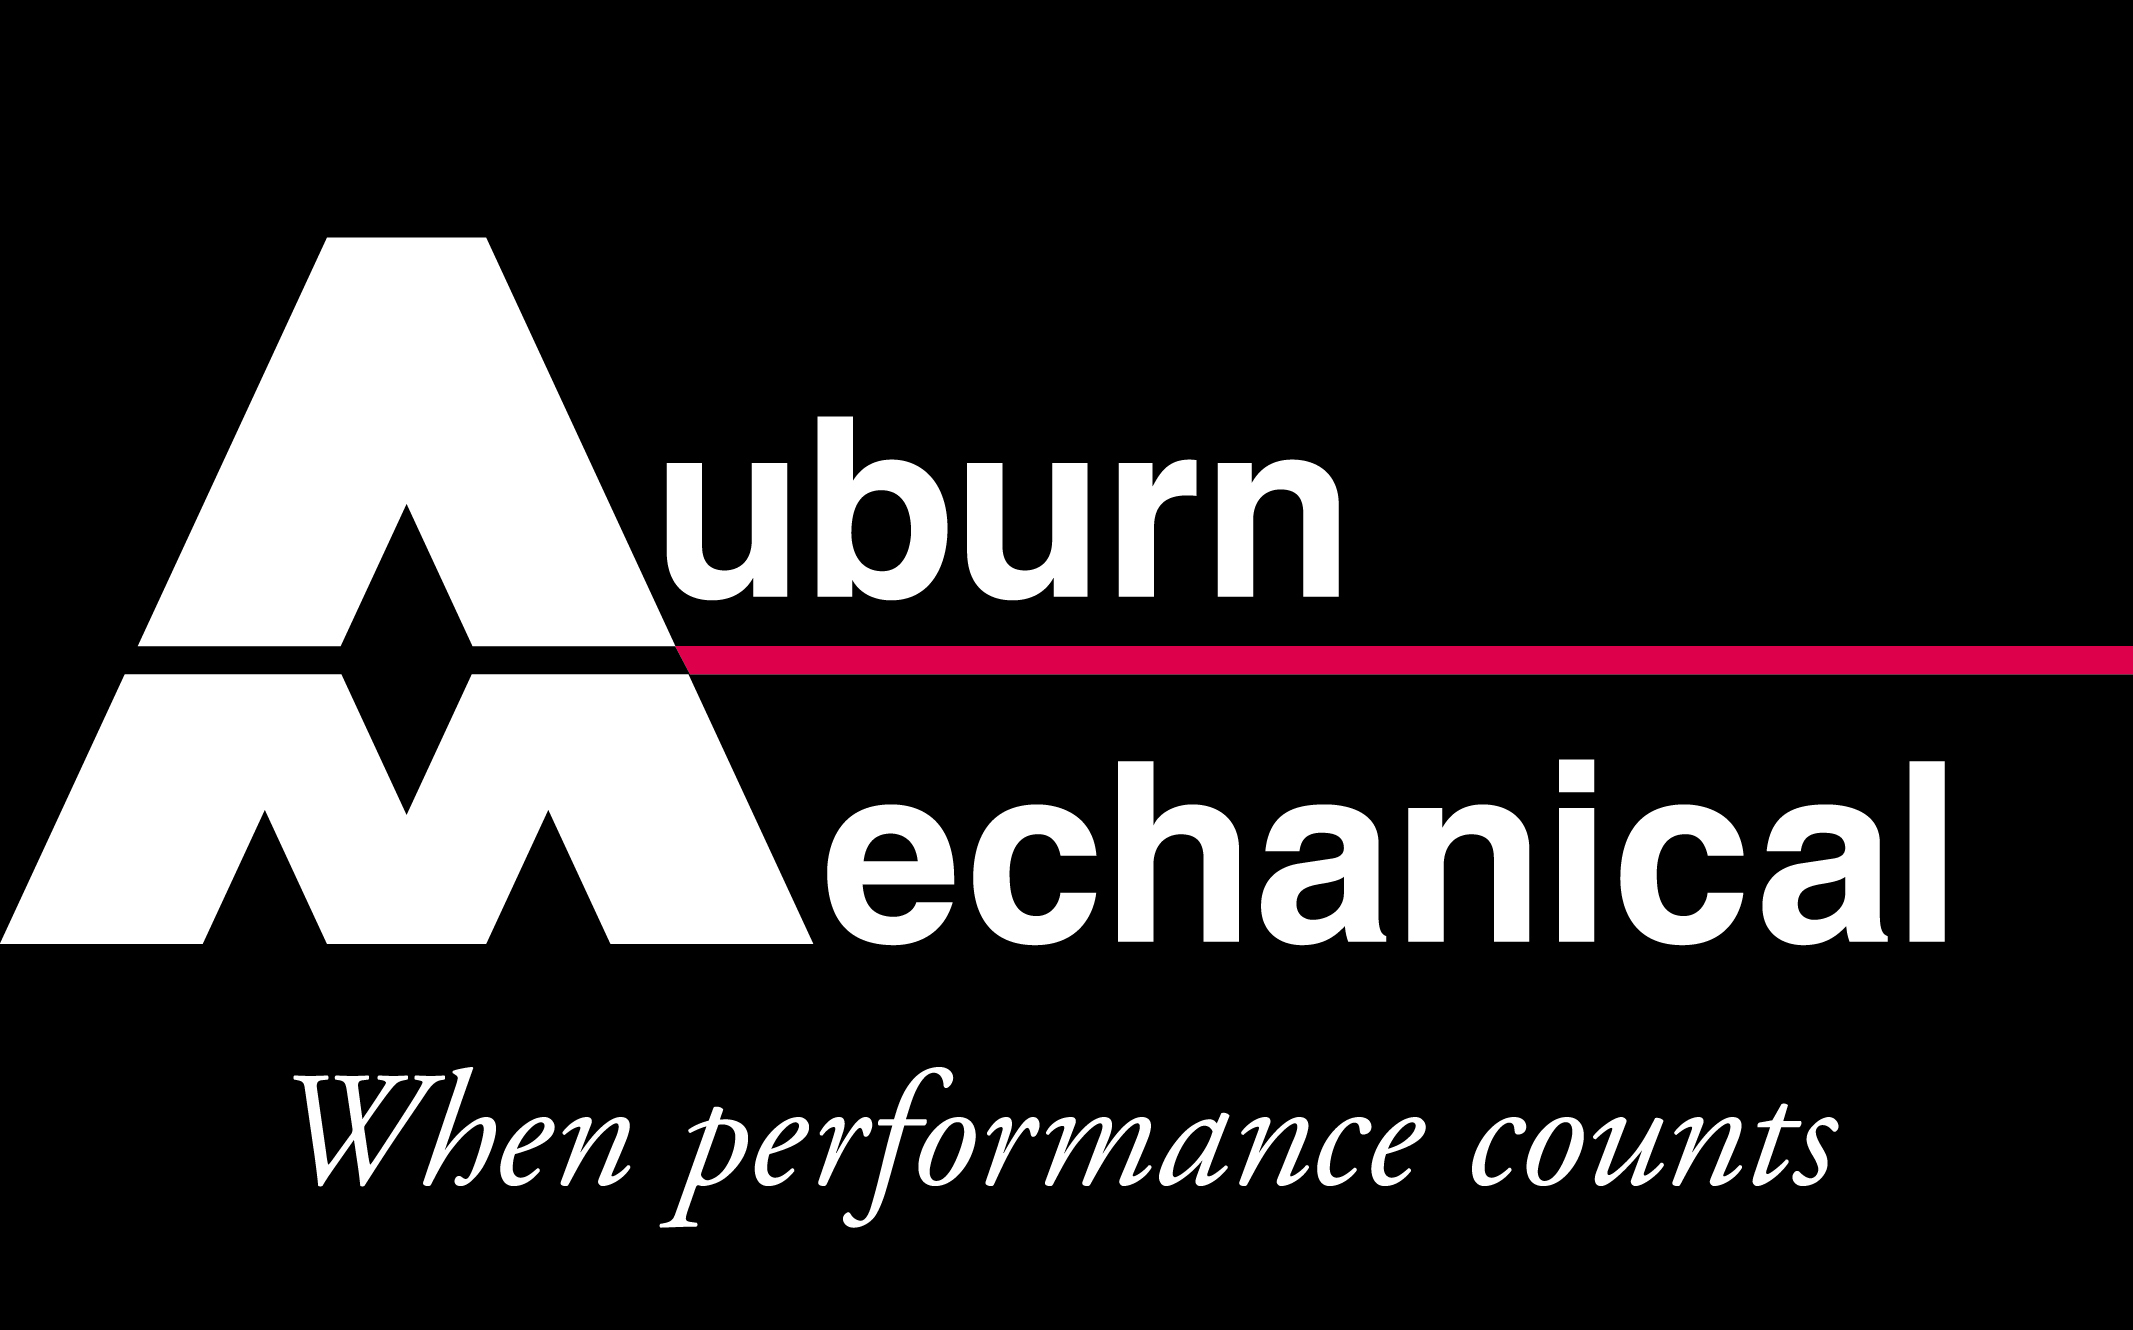 Auburn Mechanical (7 times)